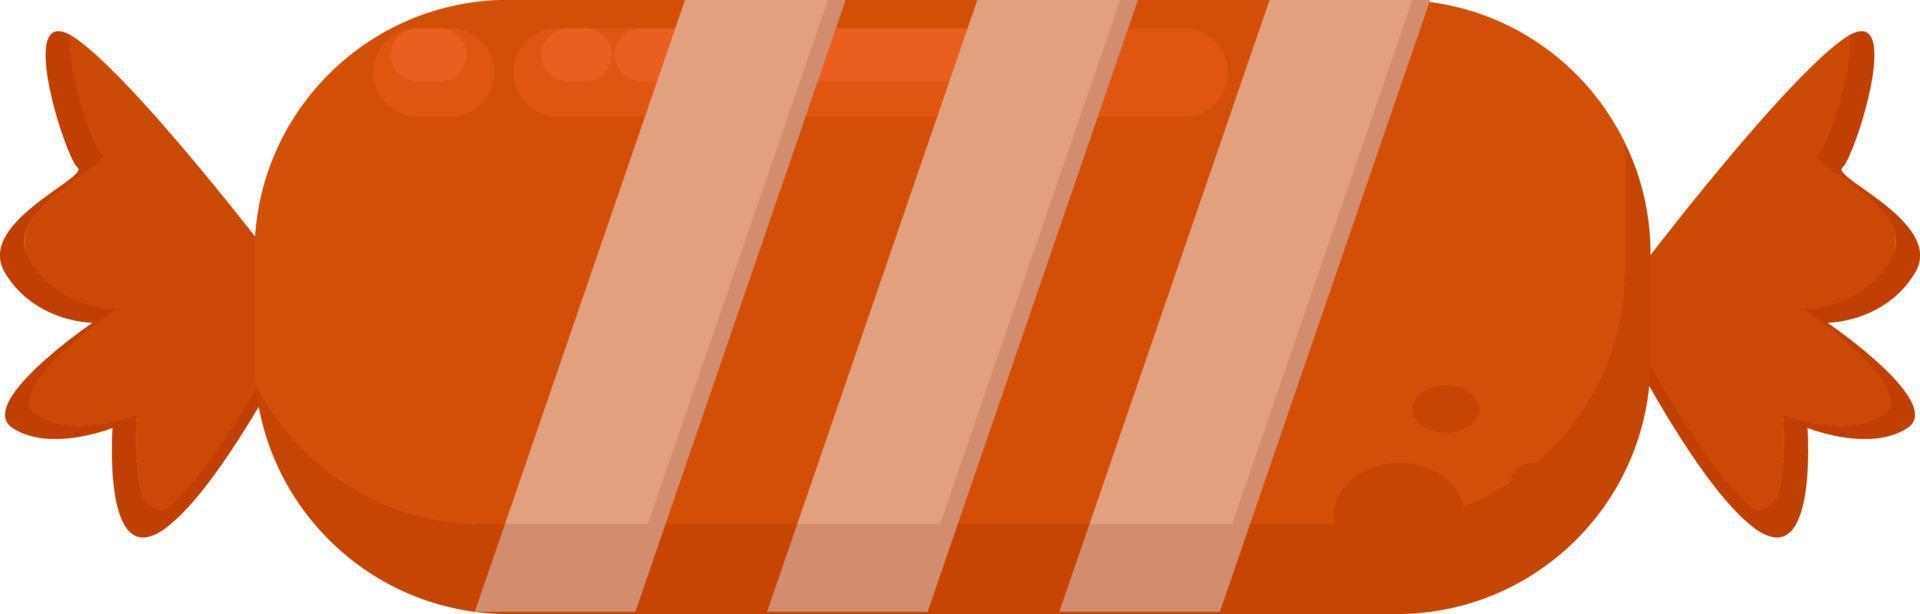 Orange candy, illustration, vector on white background.